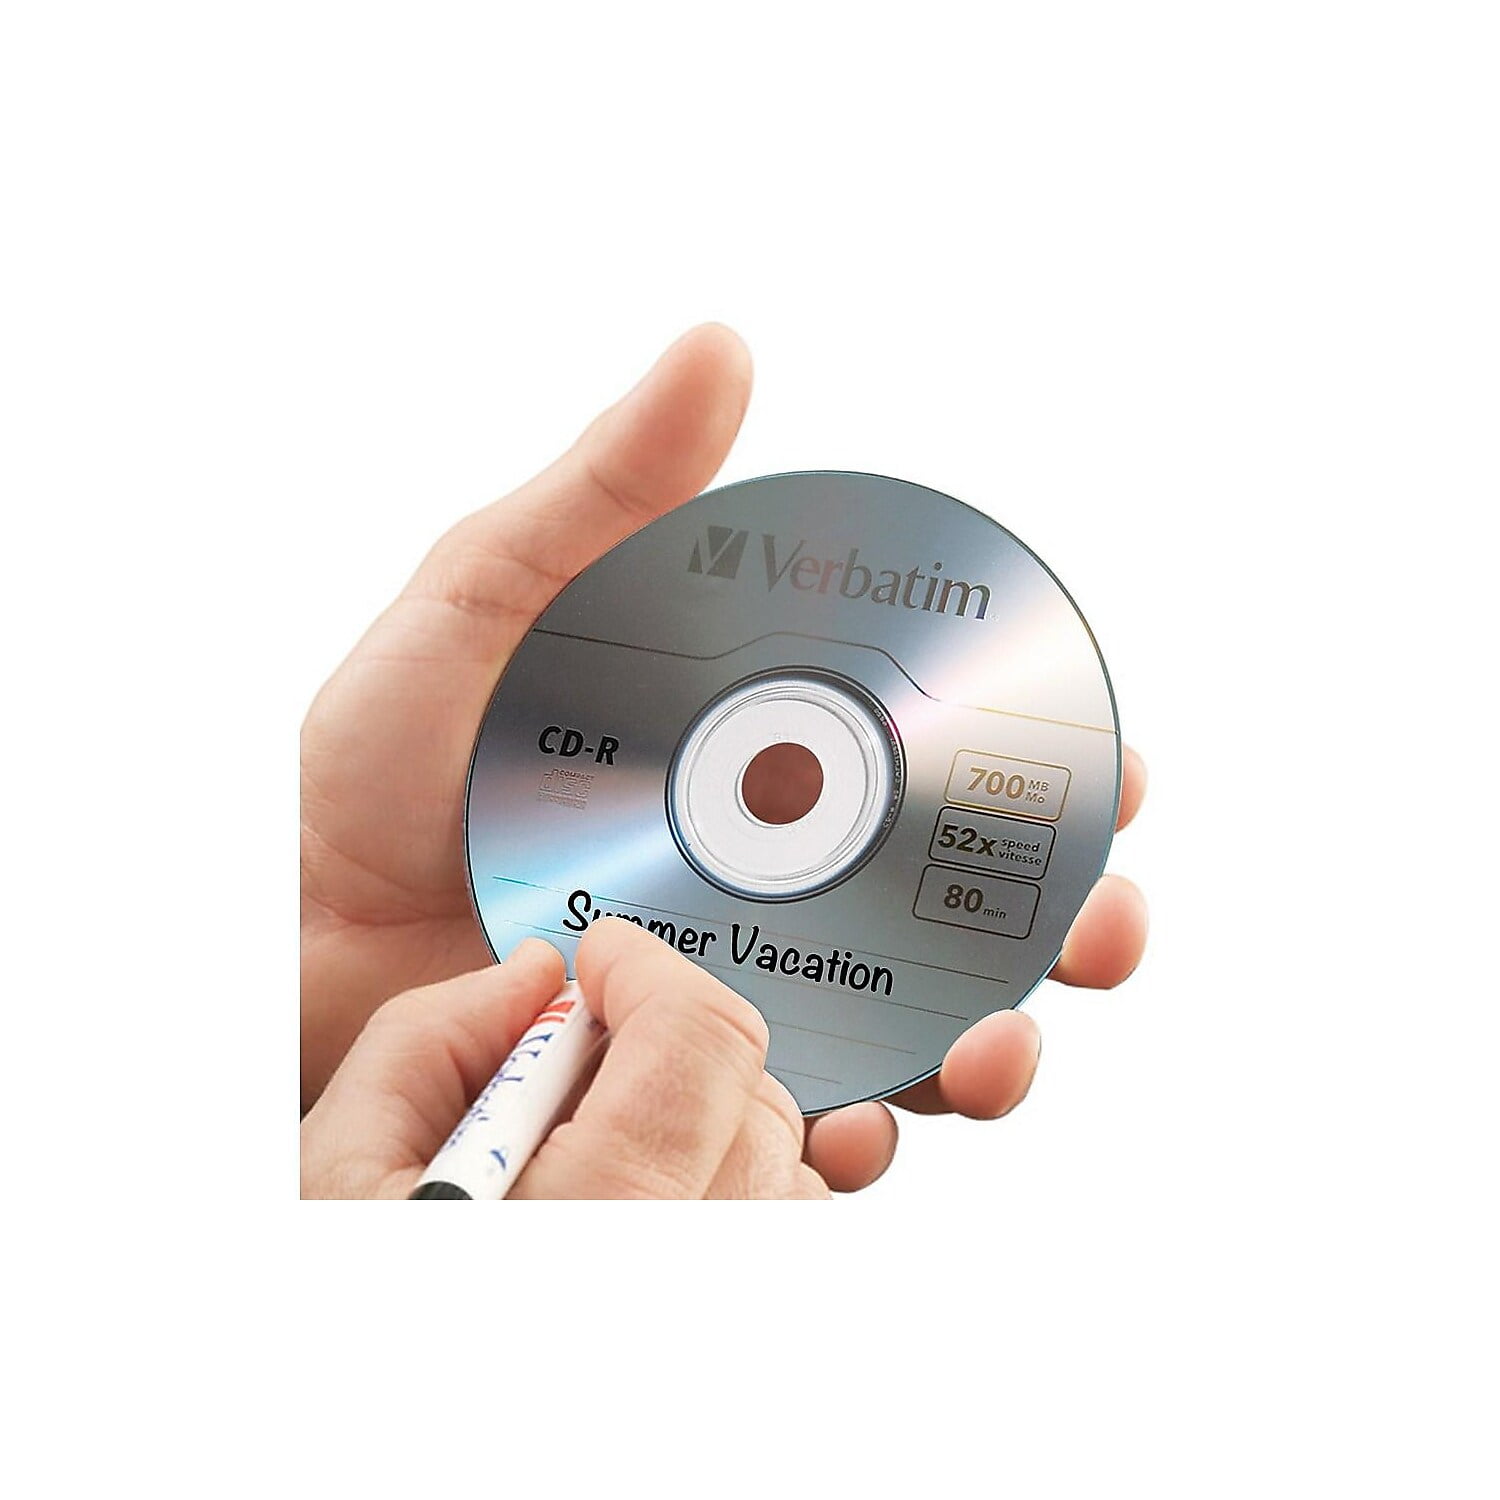 Windata CD-R 52X 700MB/80 Minute Disc 100 Pack Wrap